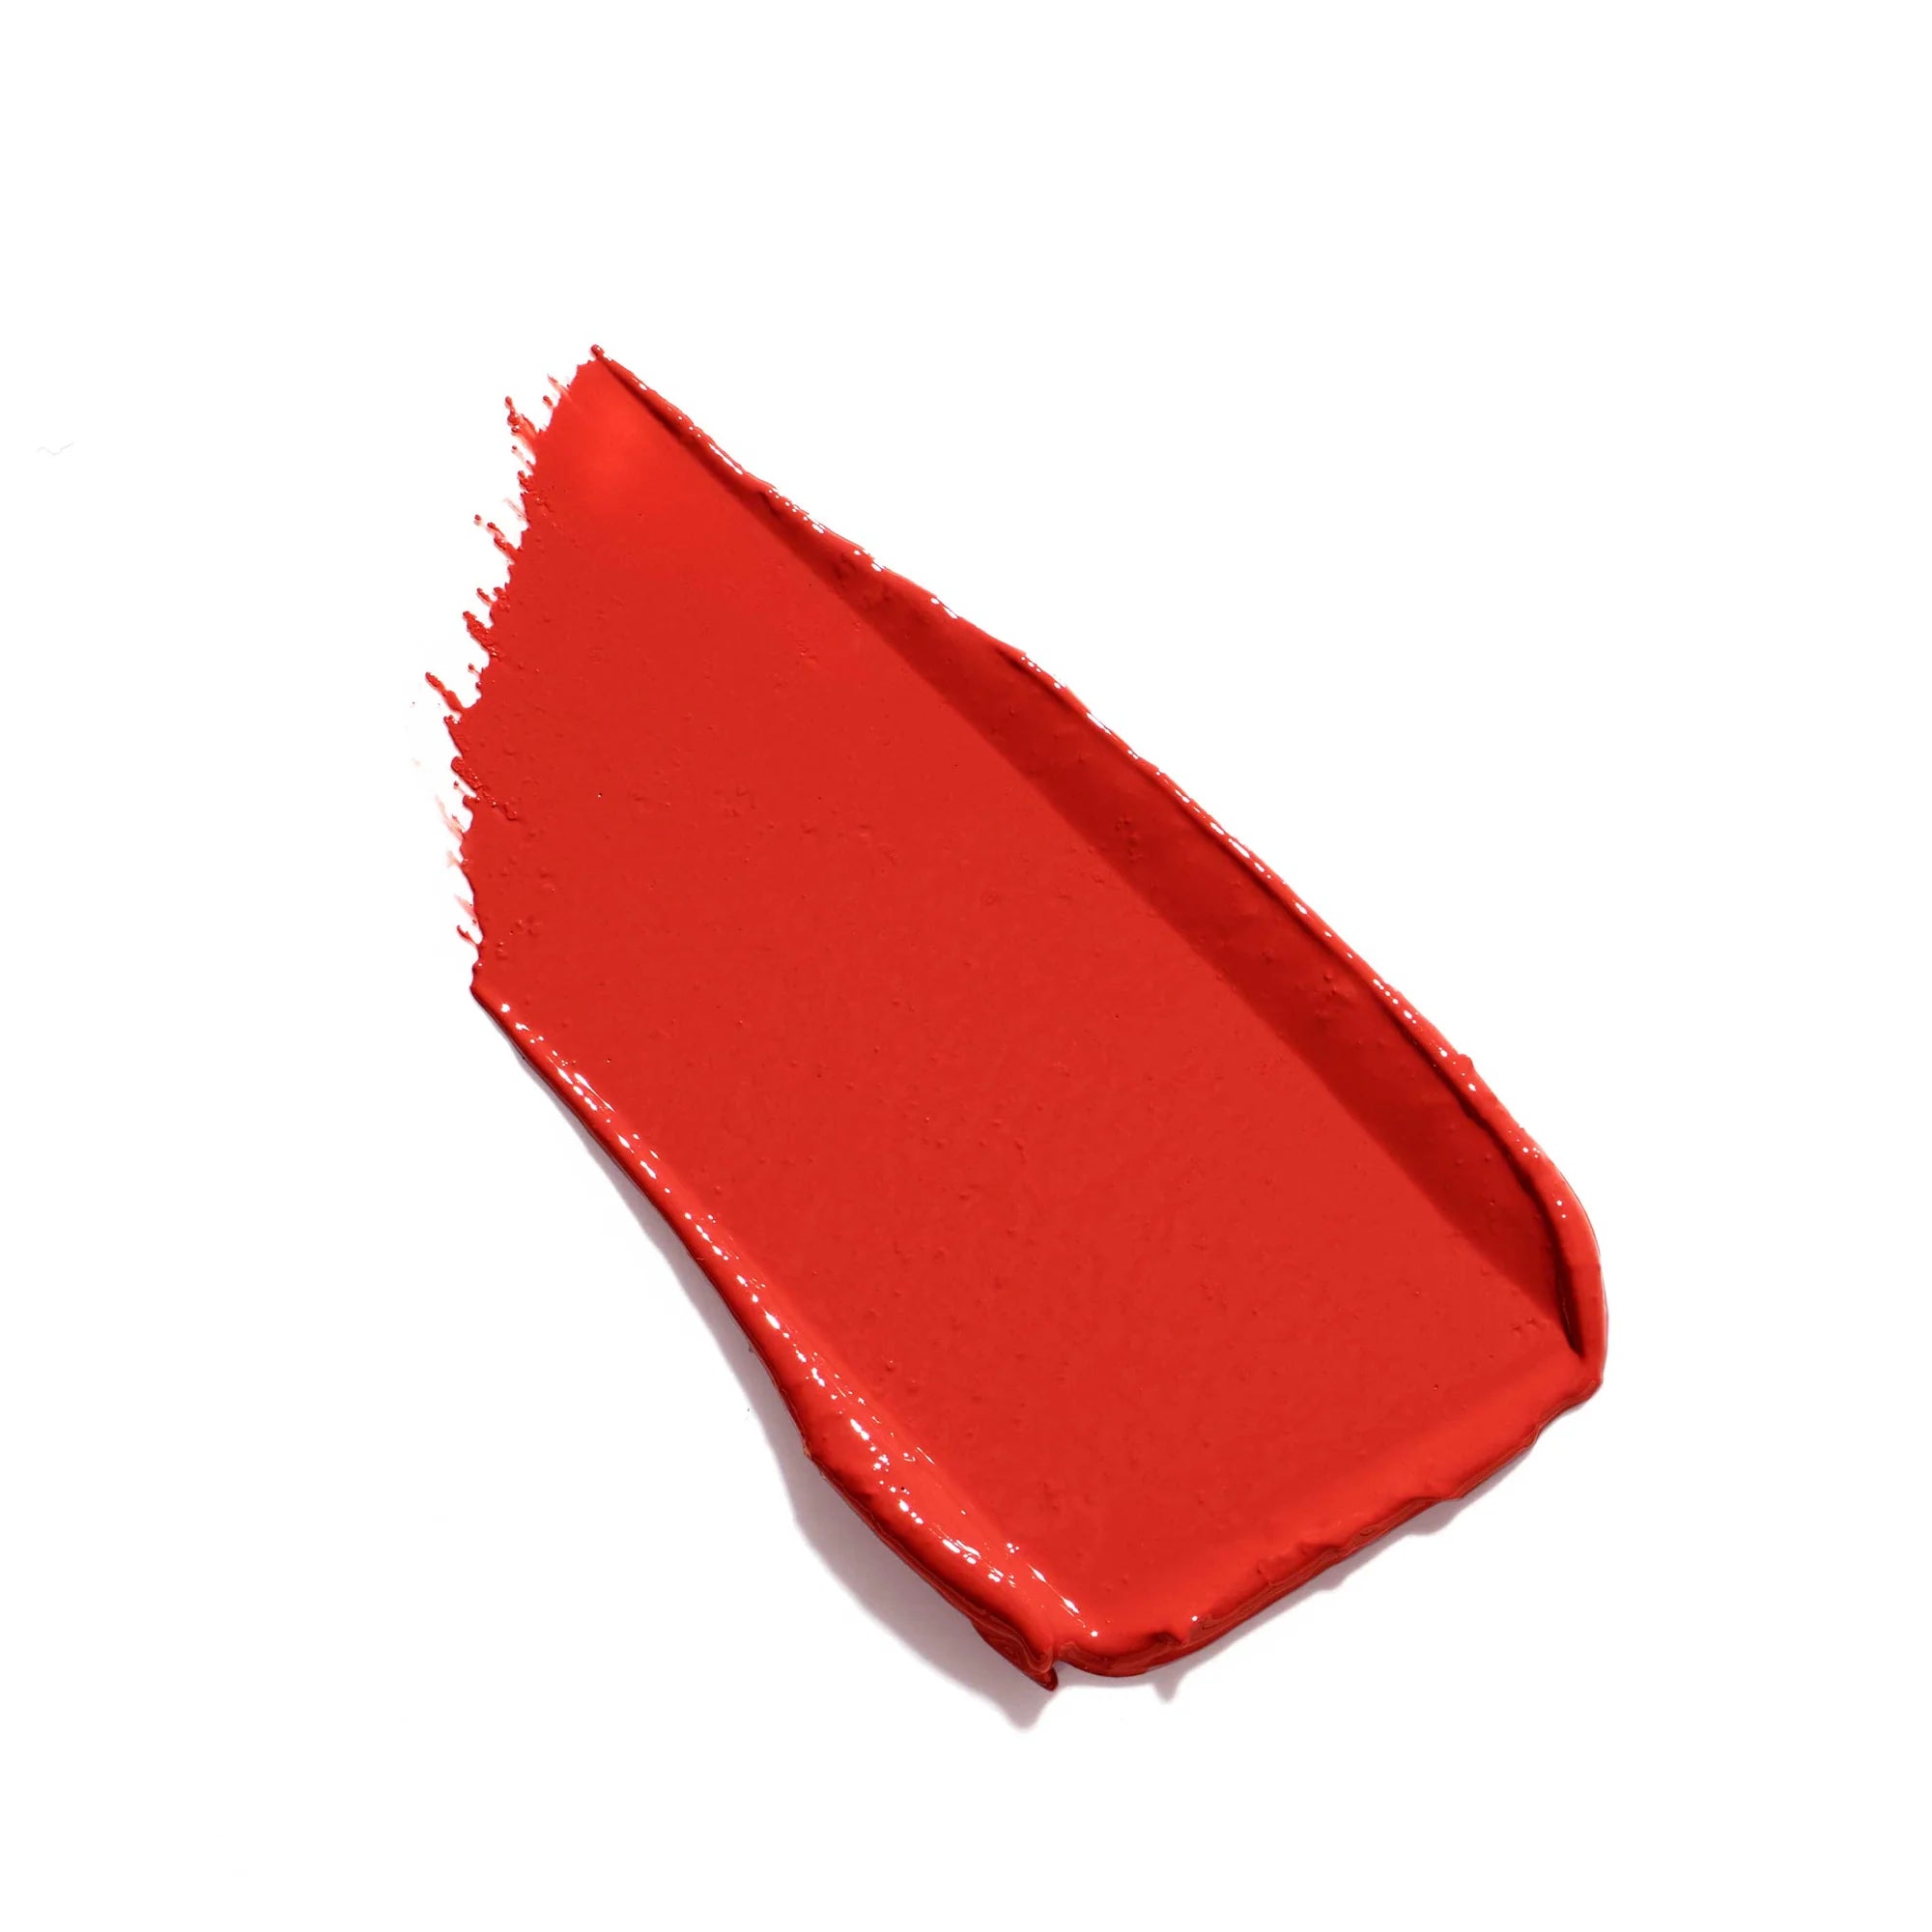 Jane Iredale's ColorLuxe Hydrating Cream Lipstick - swatch and color Poppy - warm medium-dark orange red